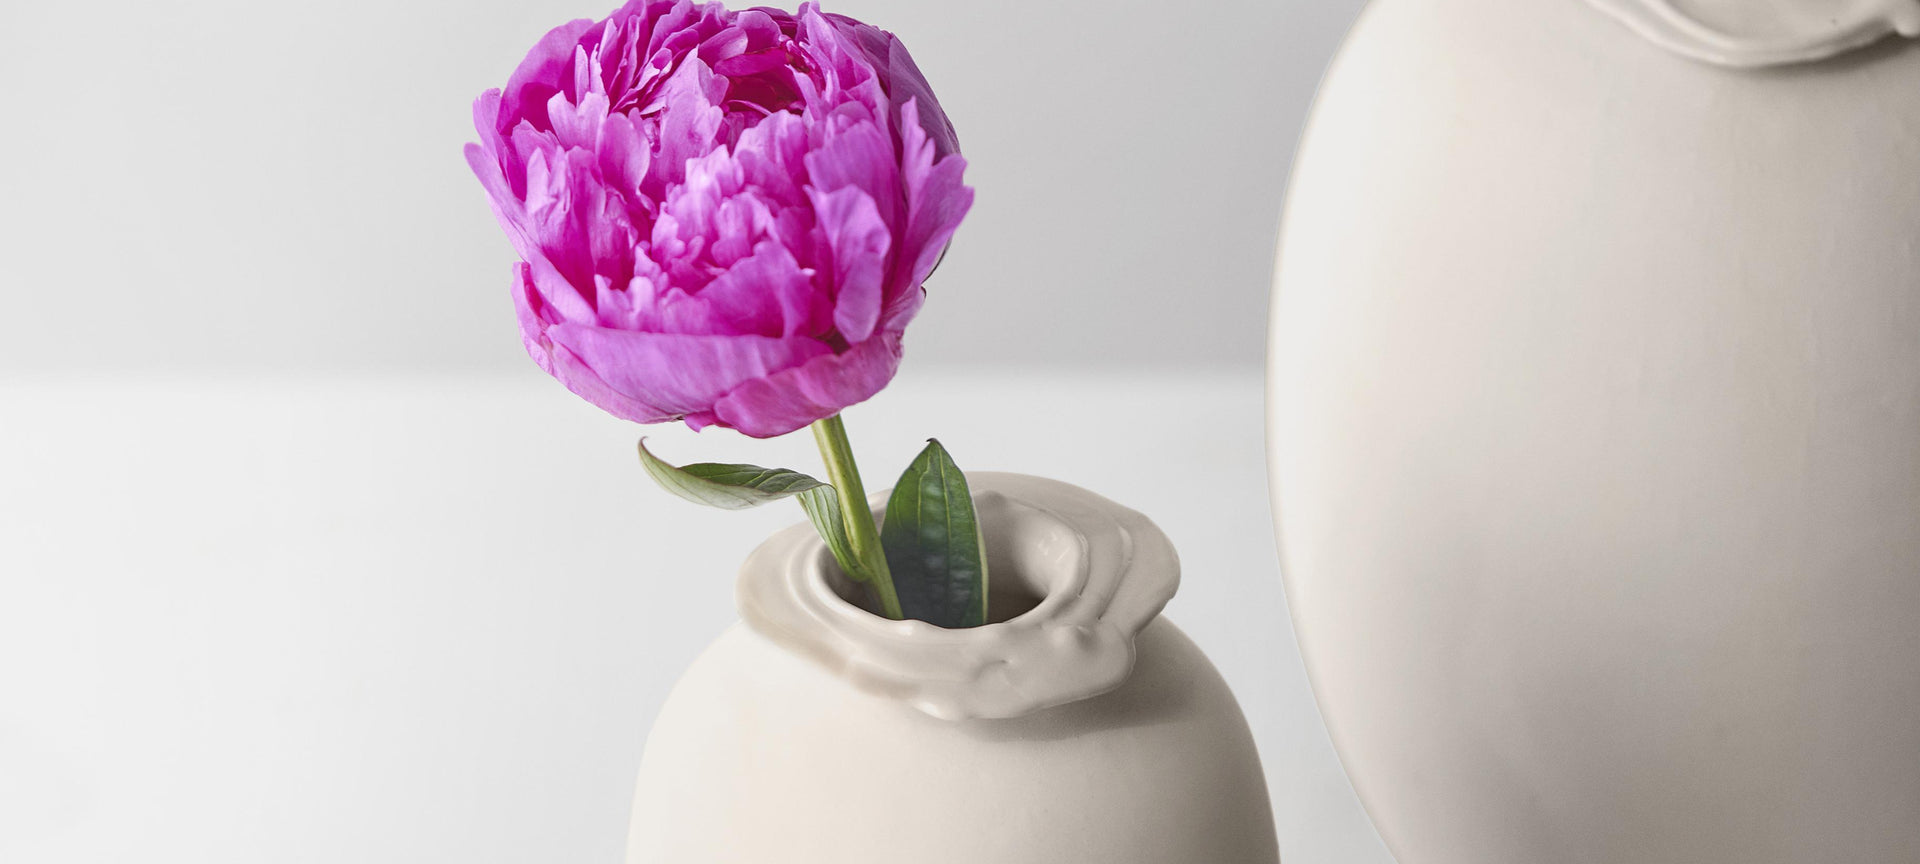 Brim vases pair pink flower ph Chris Tonnesen